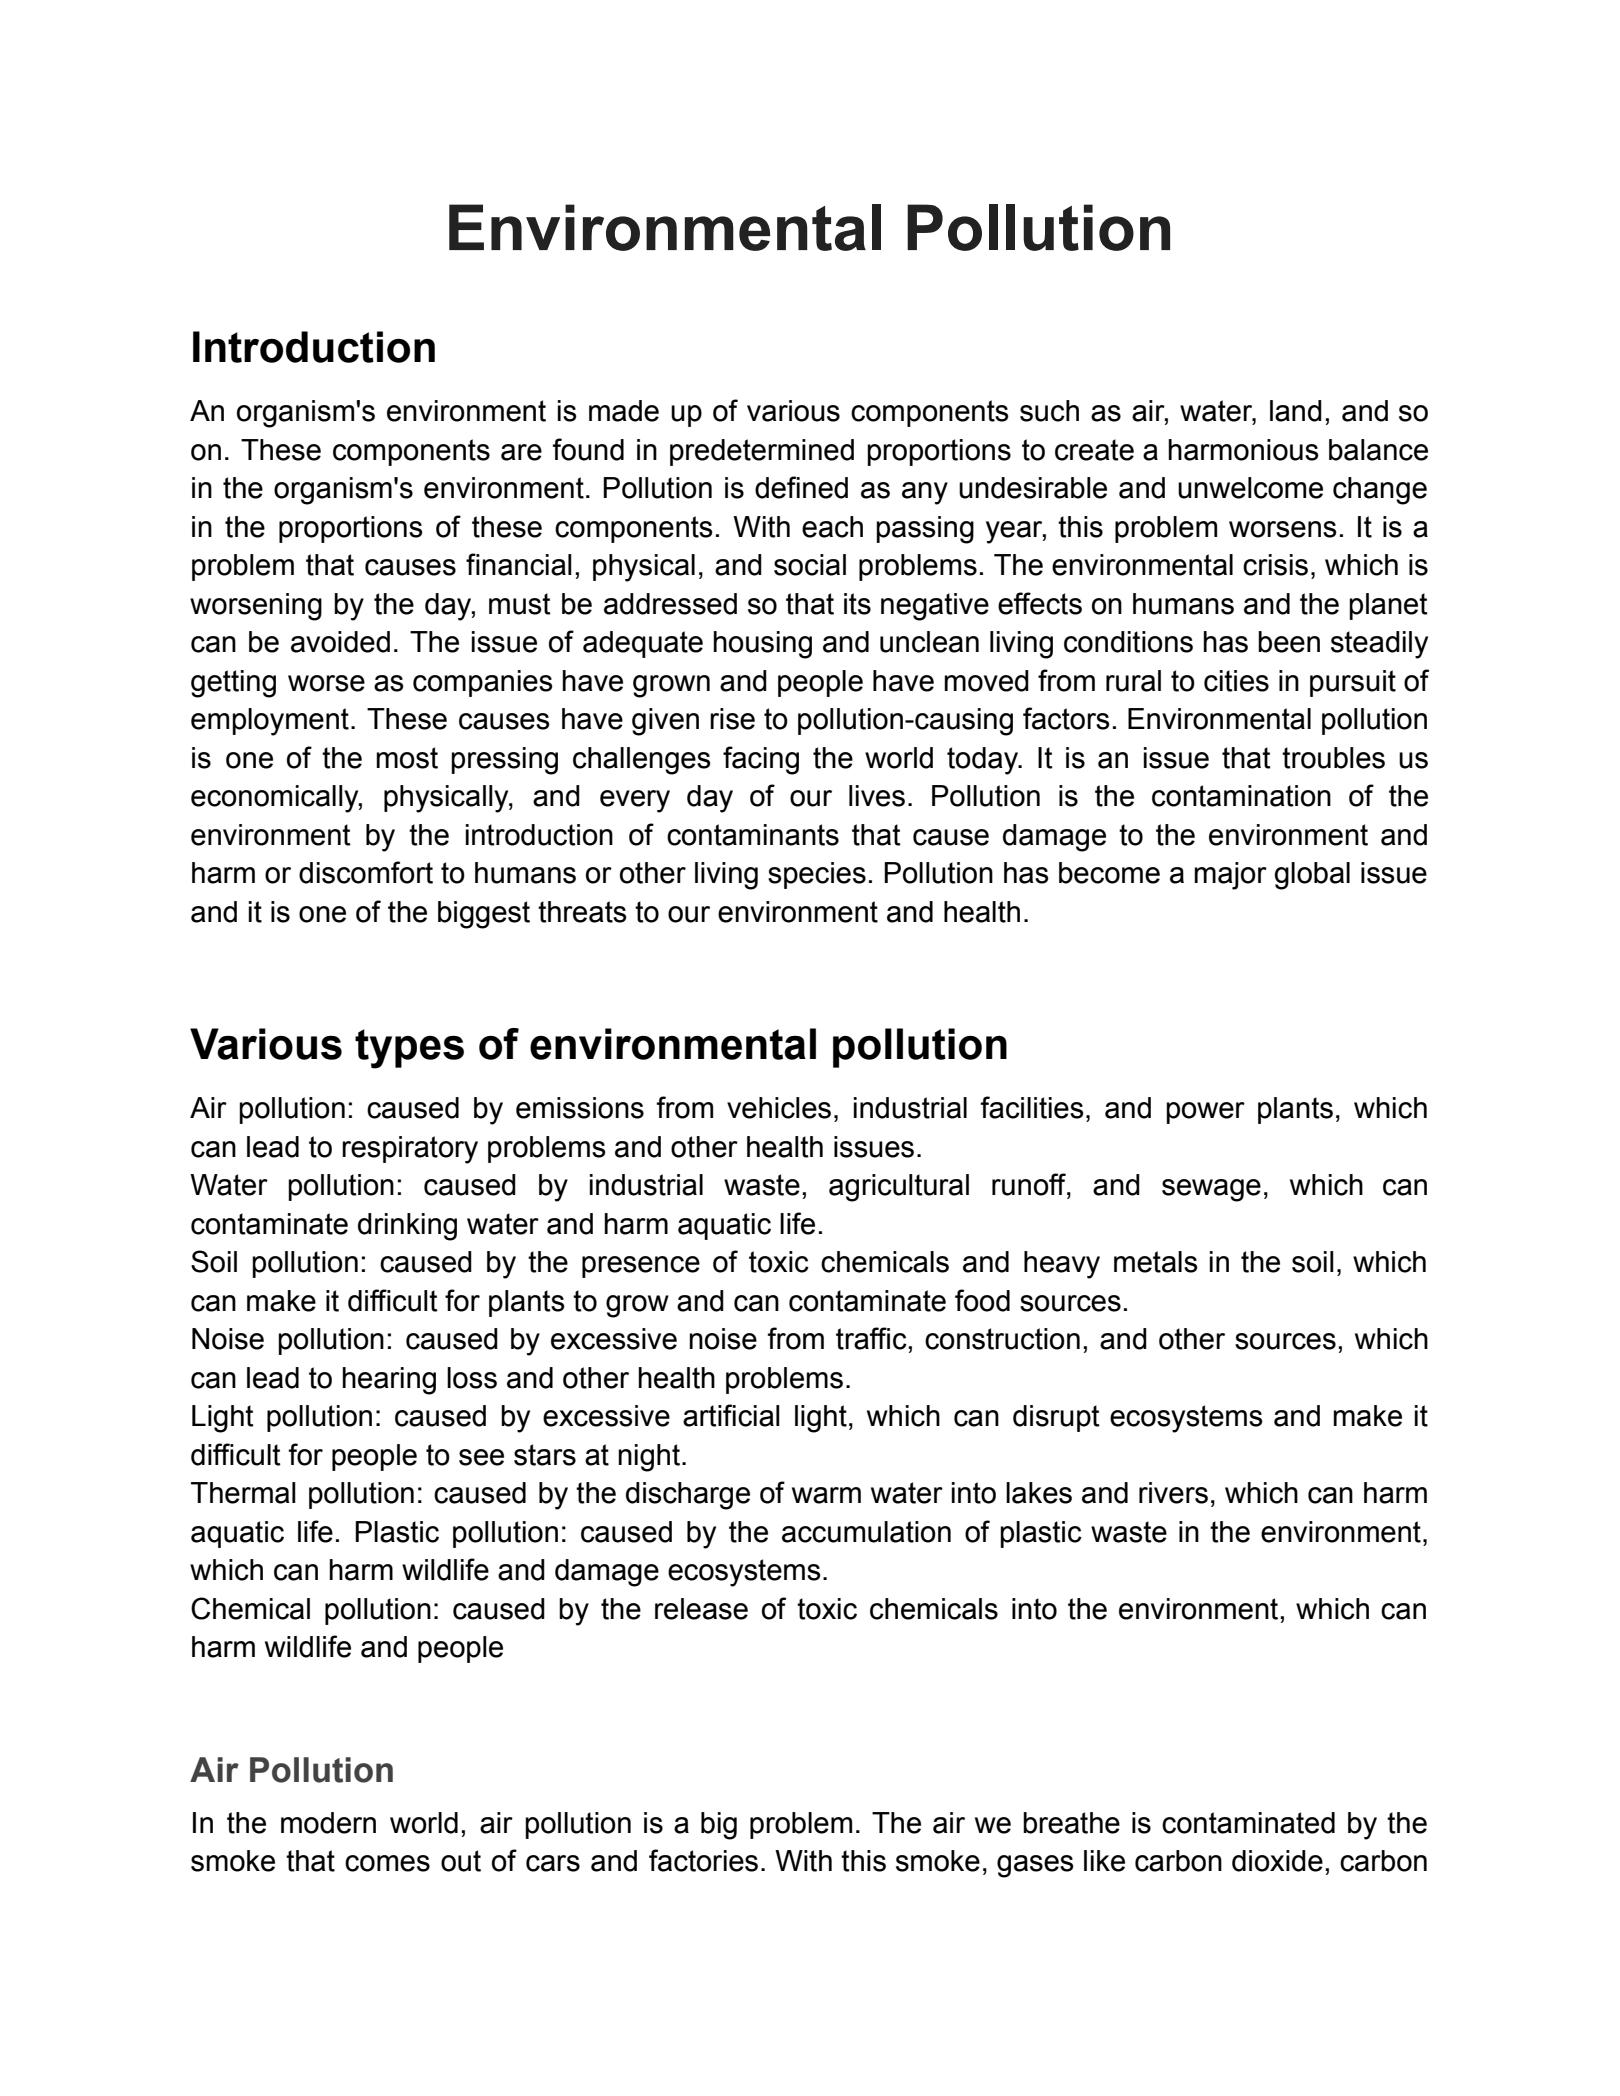 Environment Pollution Composition